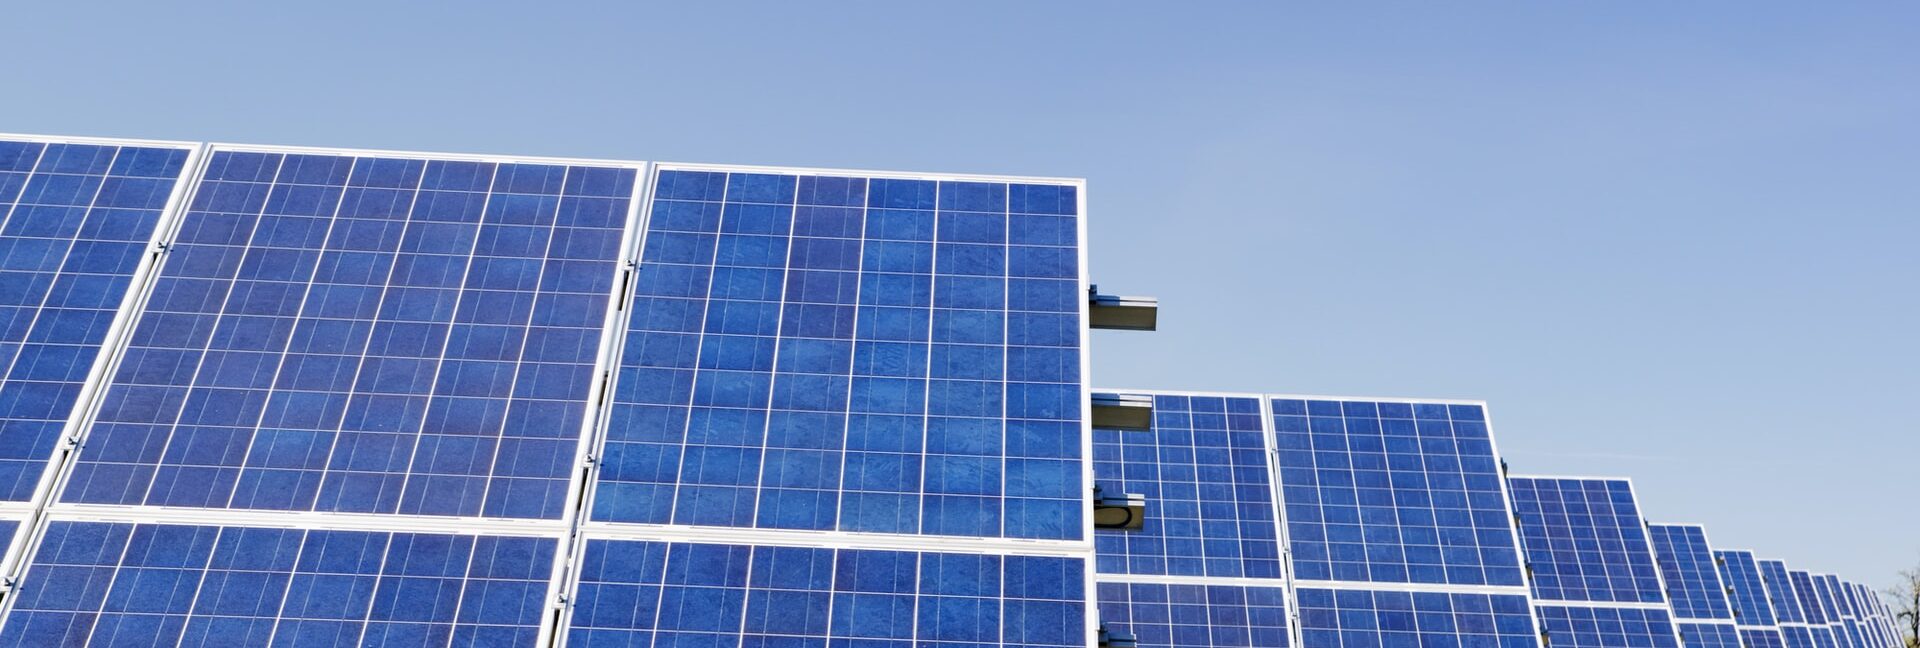 tipos de energia solar - Saiba a importância da energia solar para o meio ambiente e para o seu bolso